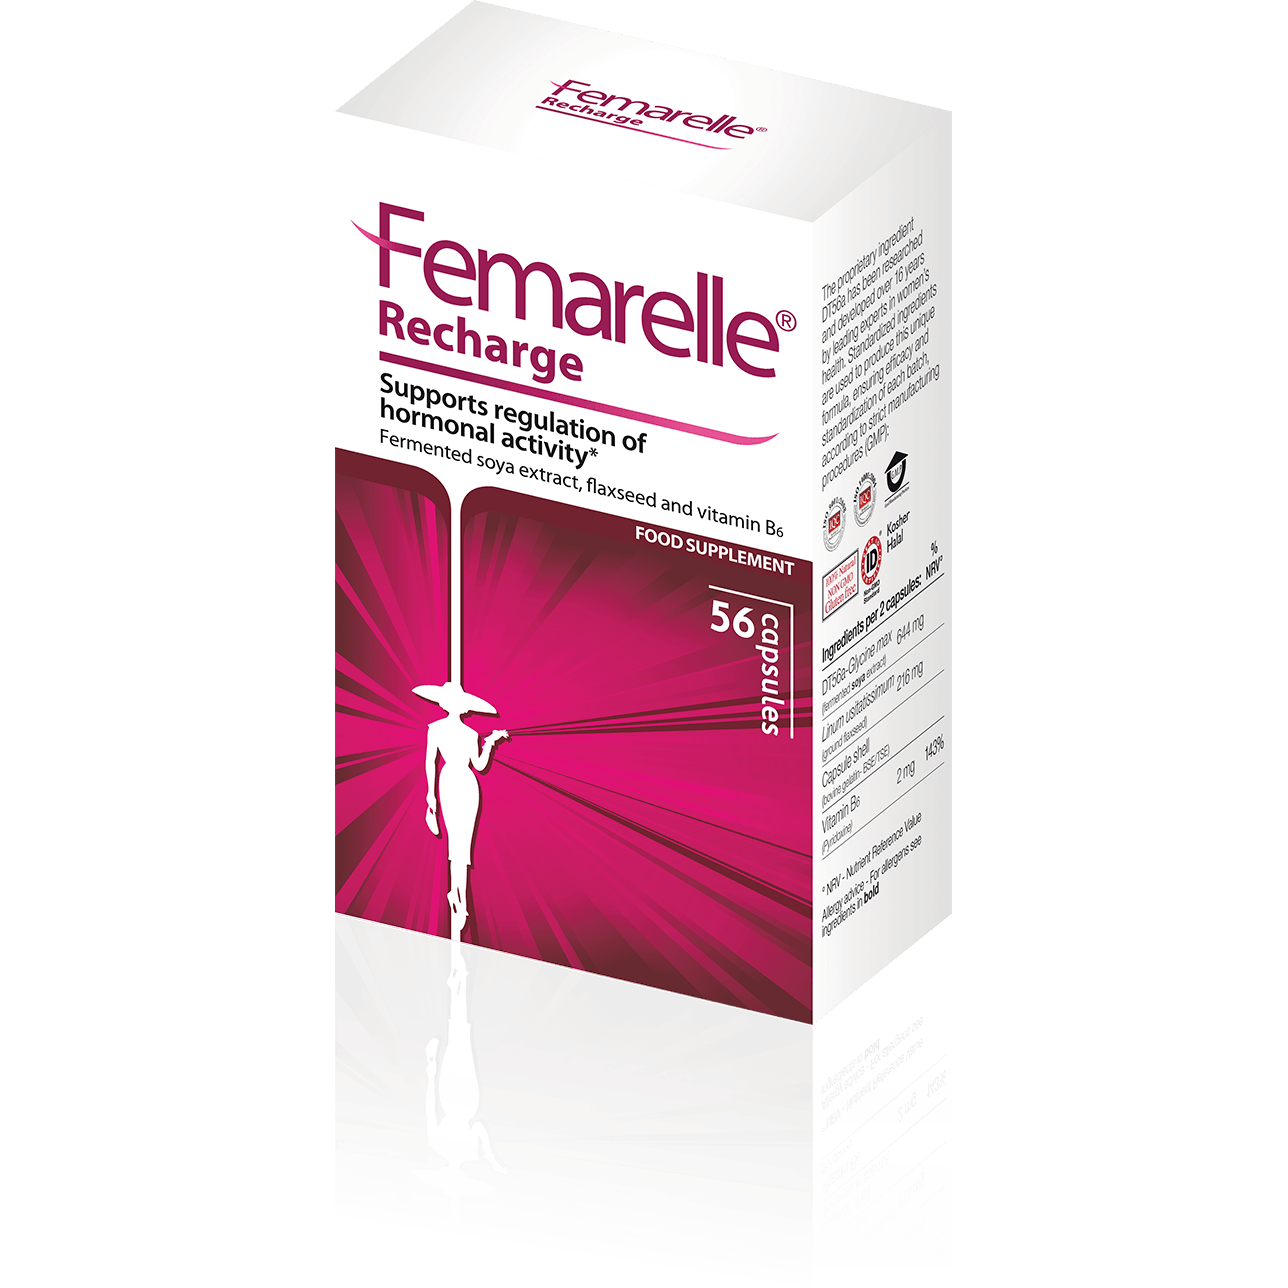 box femarlle Recharge bigflip (1)@1x